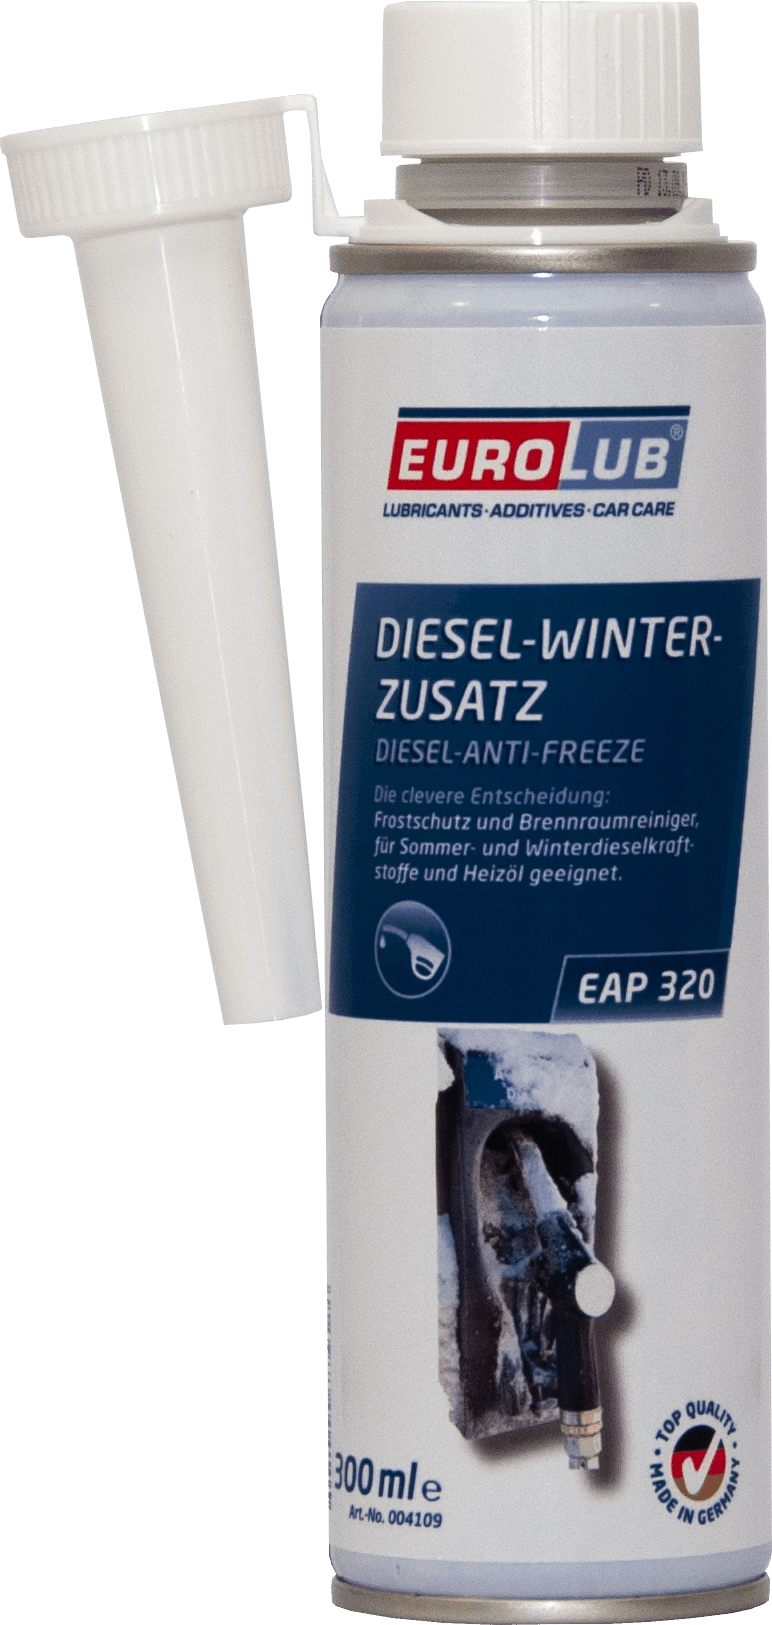 Eurolub Diesel Winterzusatz EAP 320 Anti Freeze 300 ml